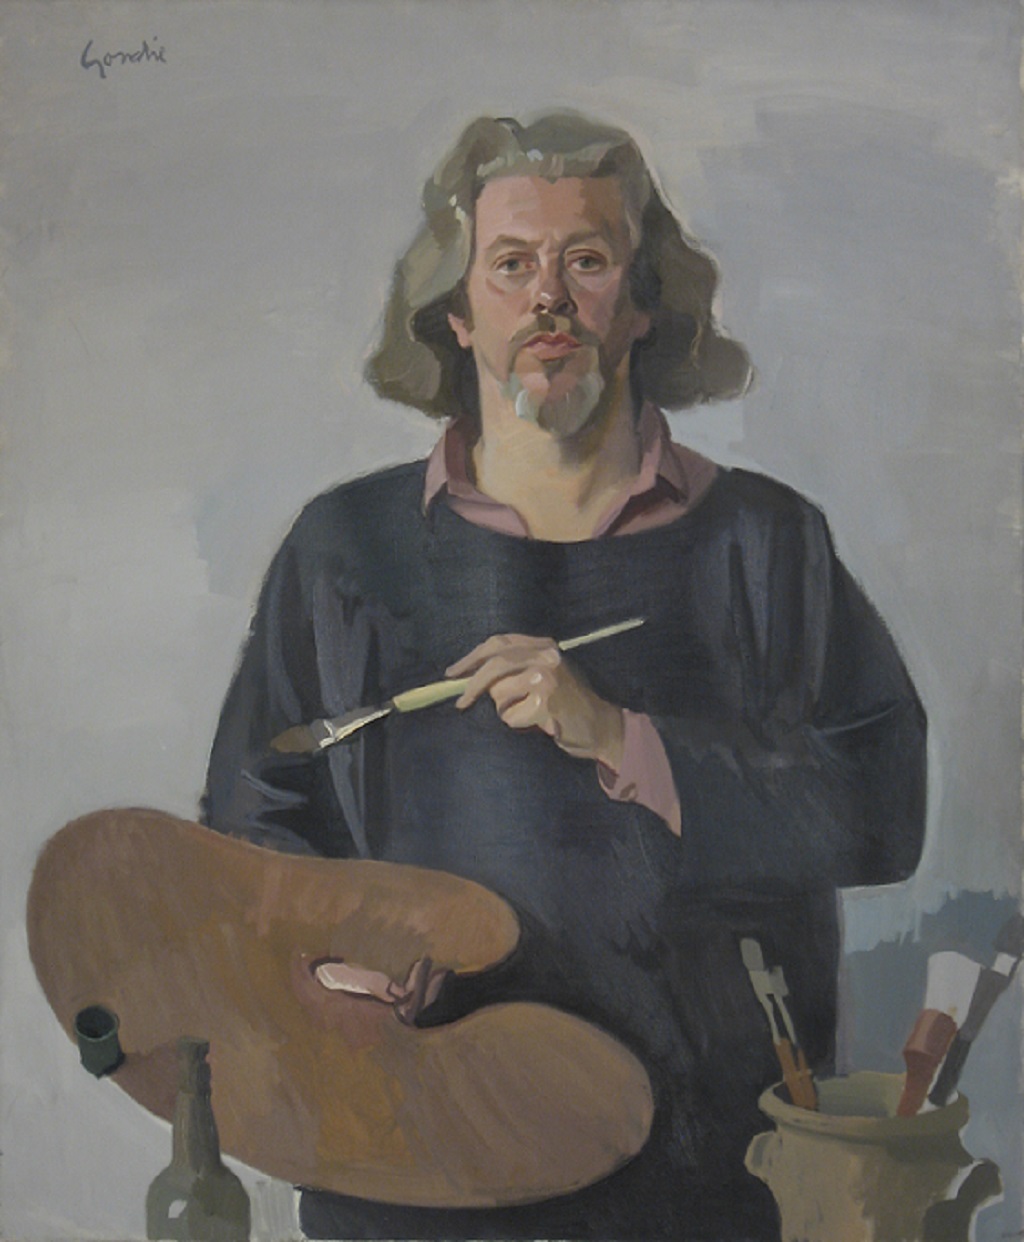 An Alexander Goudie self portrait with palette and black smock c. 1985 (Image: Goudie Estate)